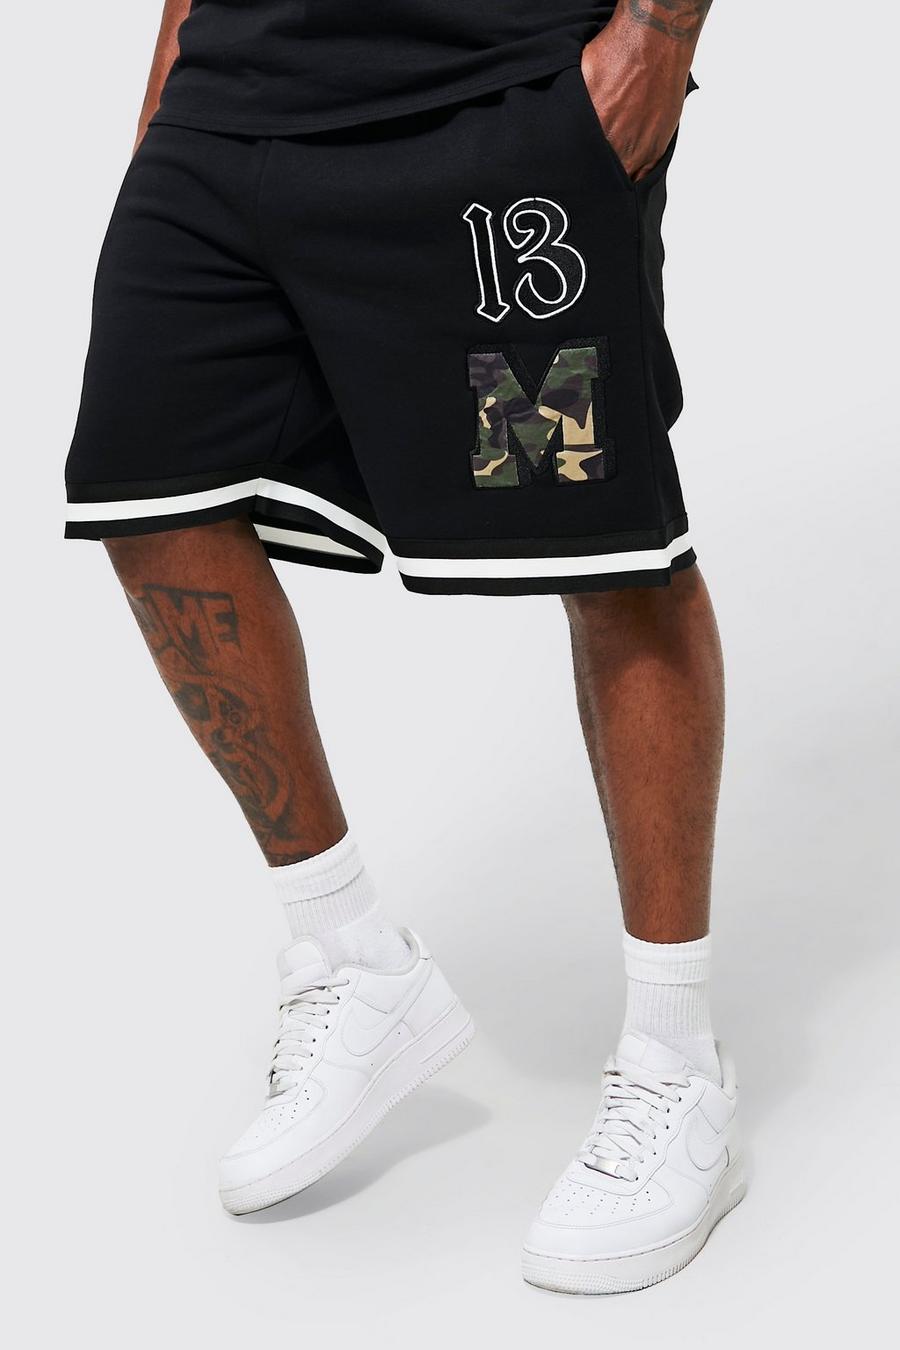 Pantaloncini da basket Plus Size in jersey con applique stile Varsity, Black nero